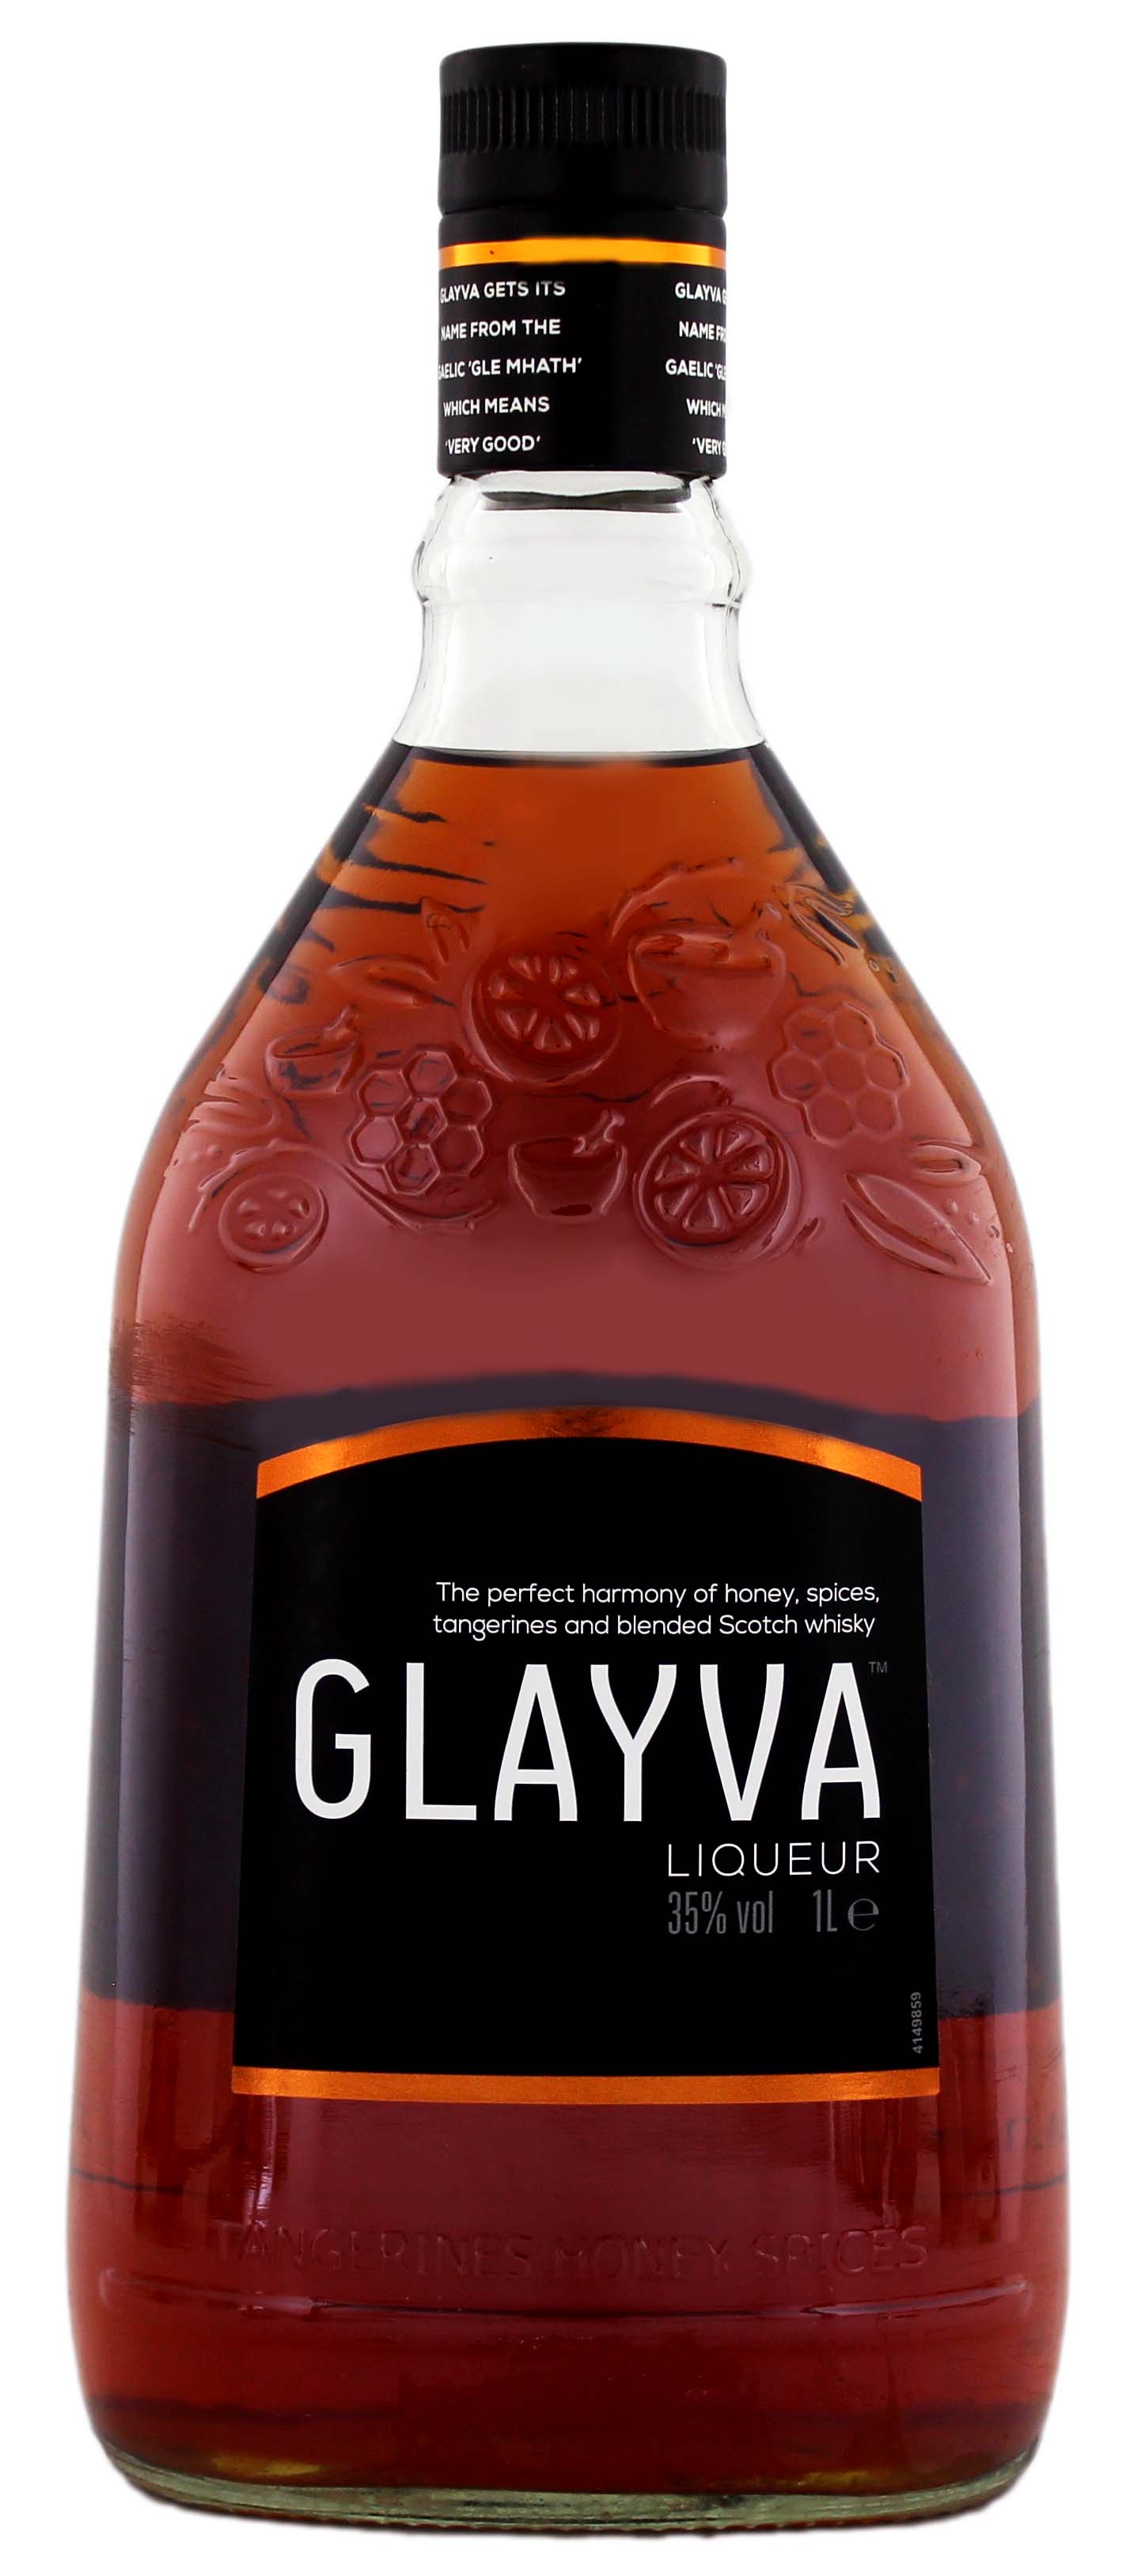 Liqueur im Shop Whisky Drinkology kaufen jetzt ! Glayva Online